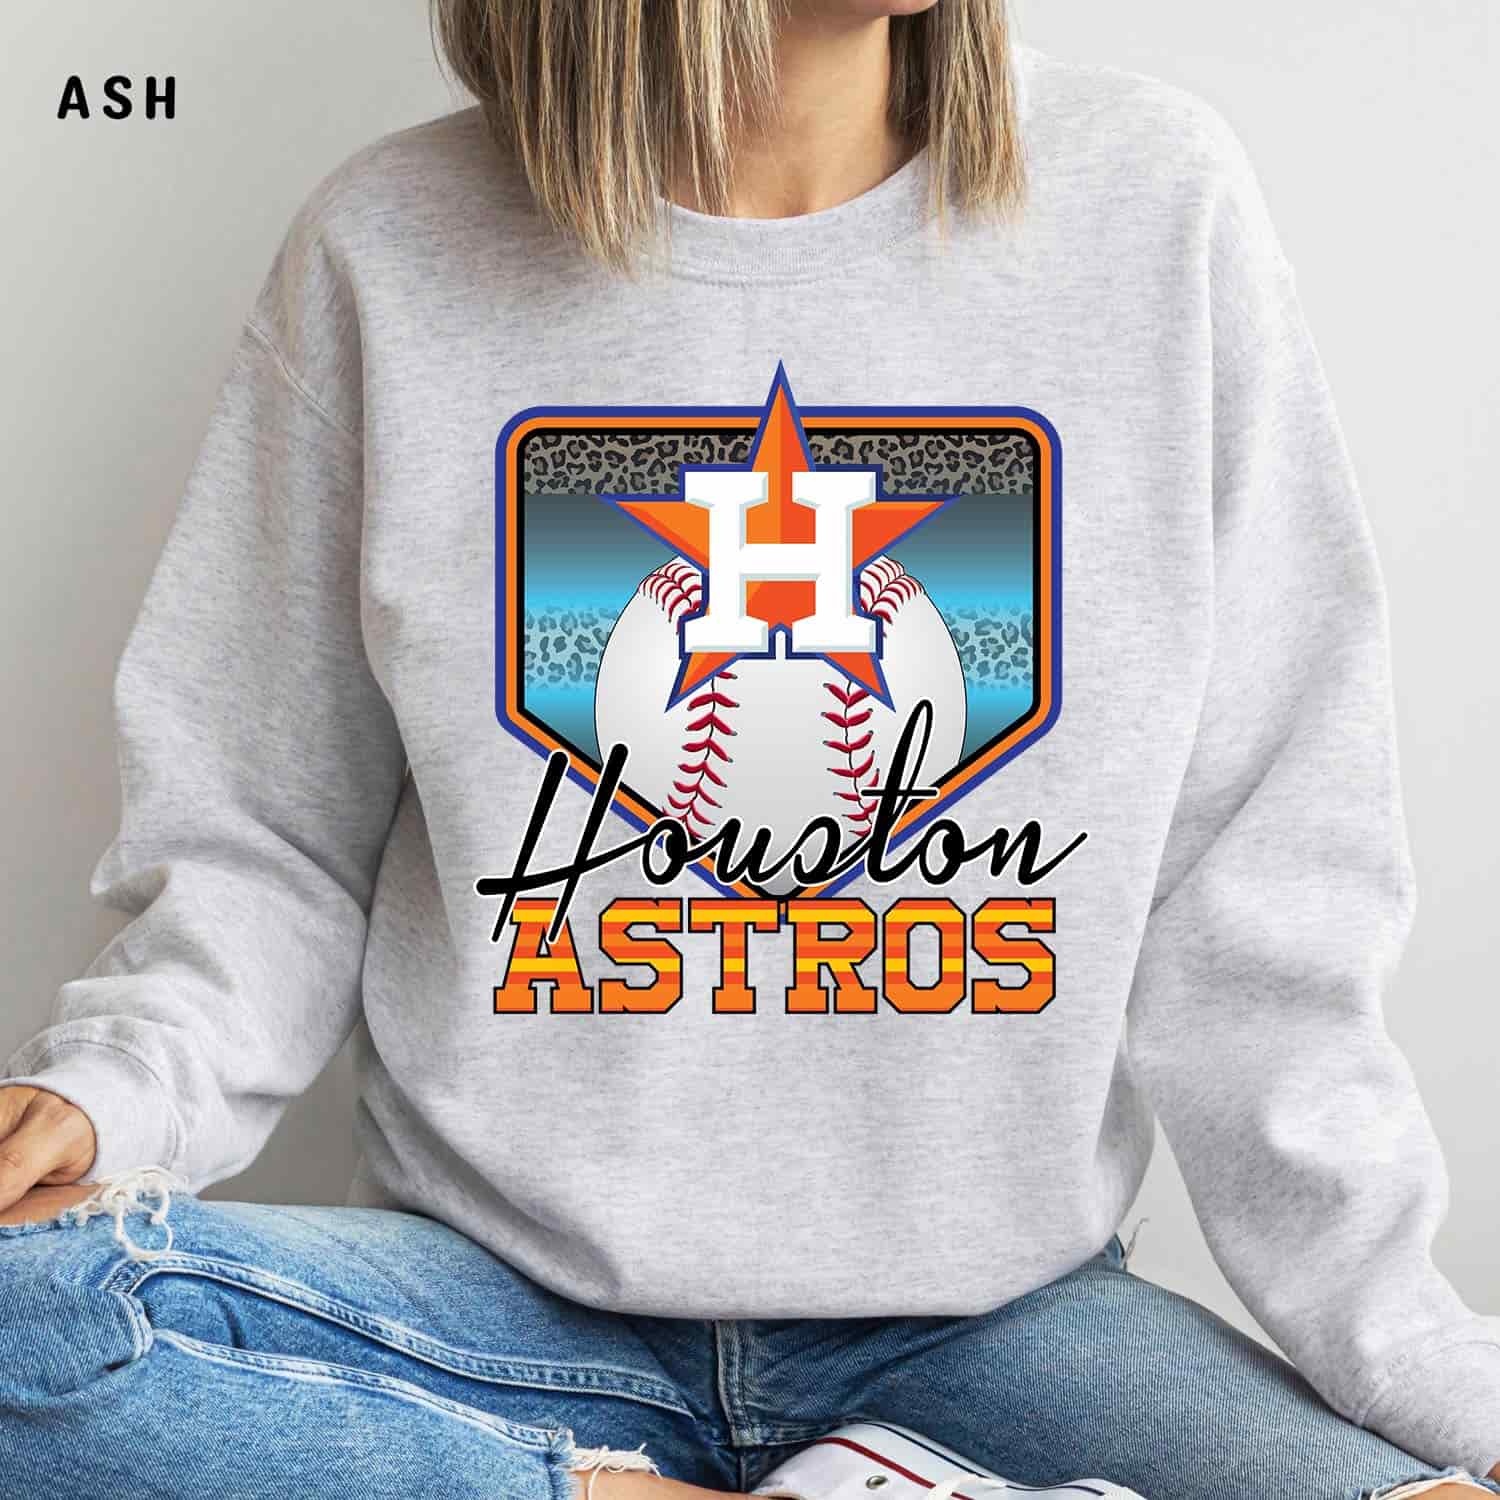 where to buy houston astros gear